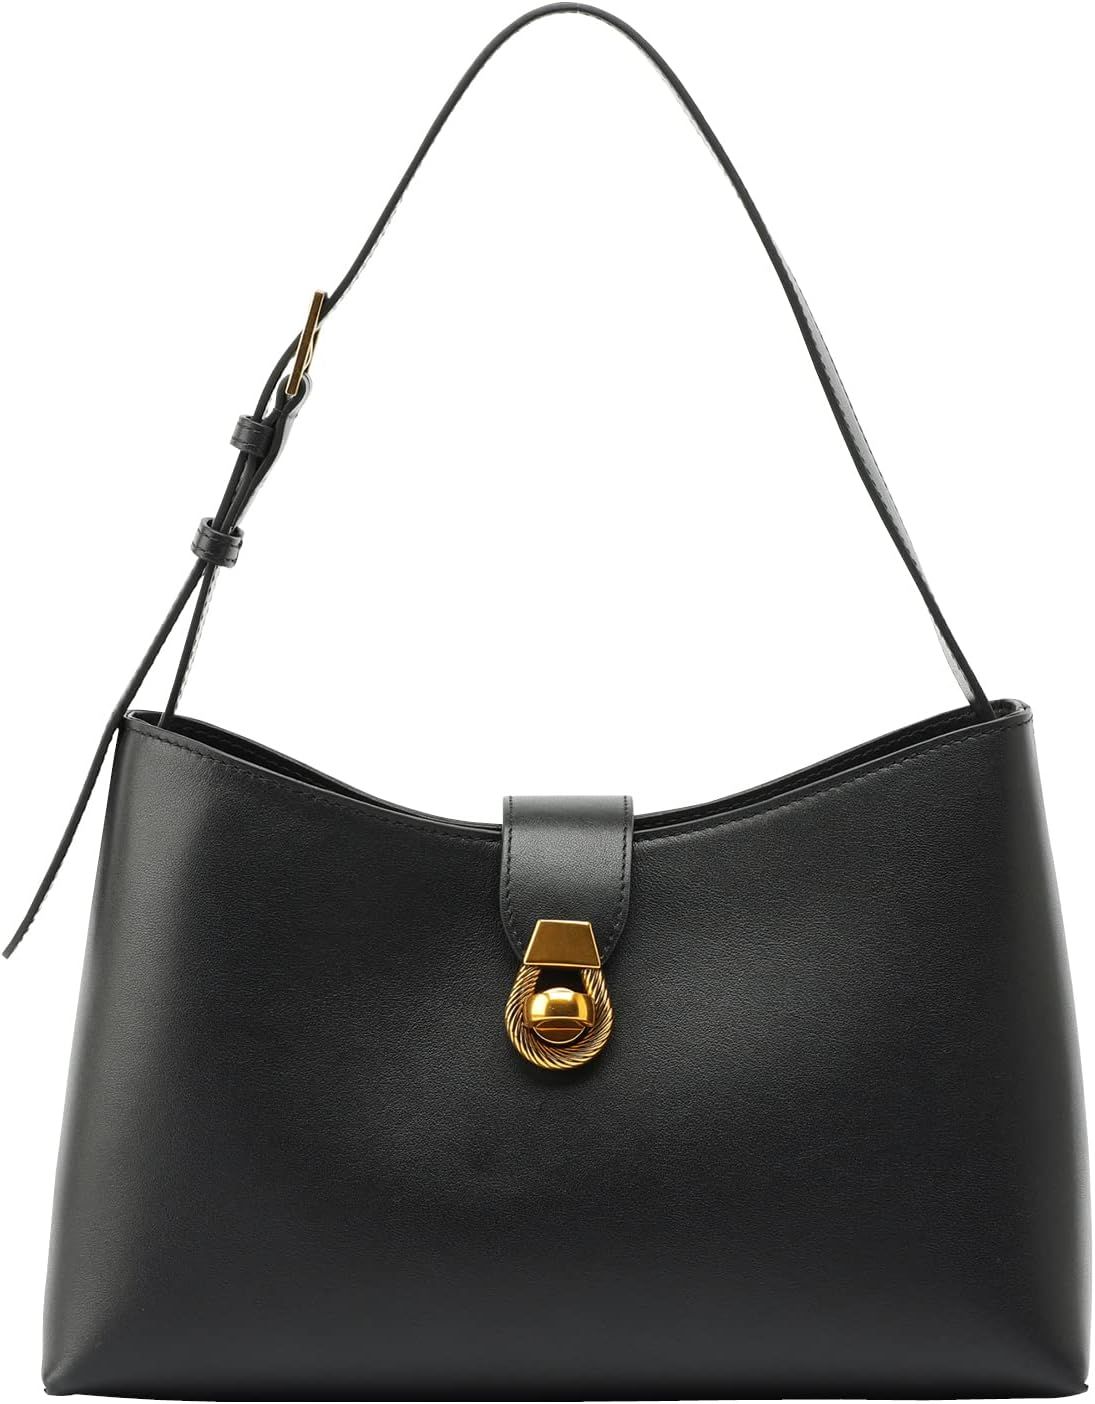 C.Paravano Tote Bag for Women | Shoulder Bags for Woman | Handbags for Women | Crossbody Handbags | Amazon (US)